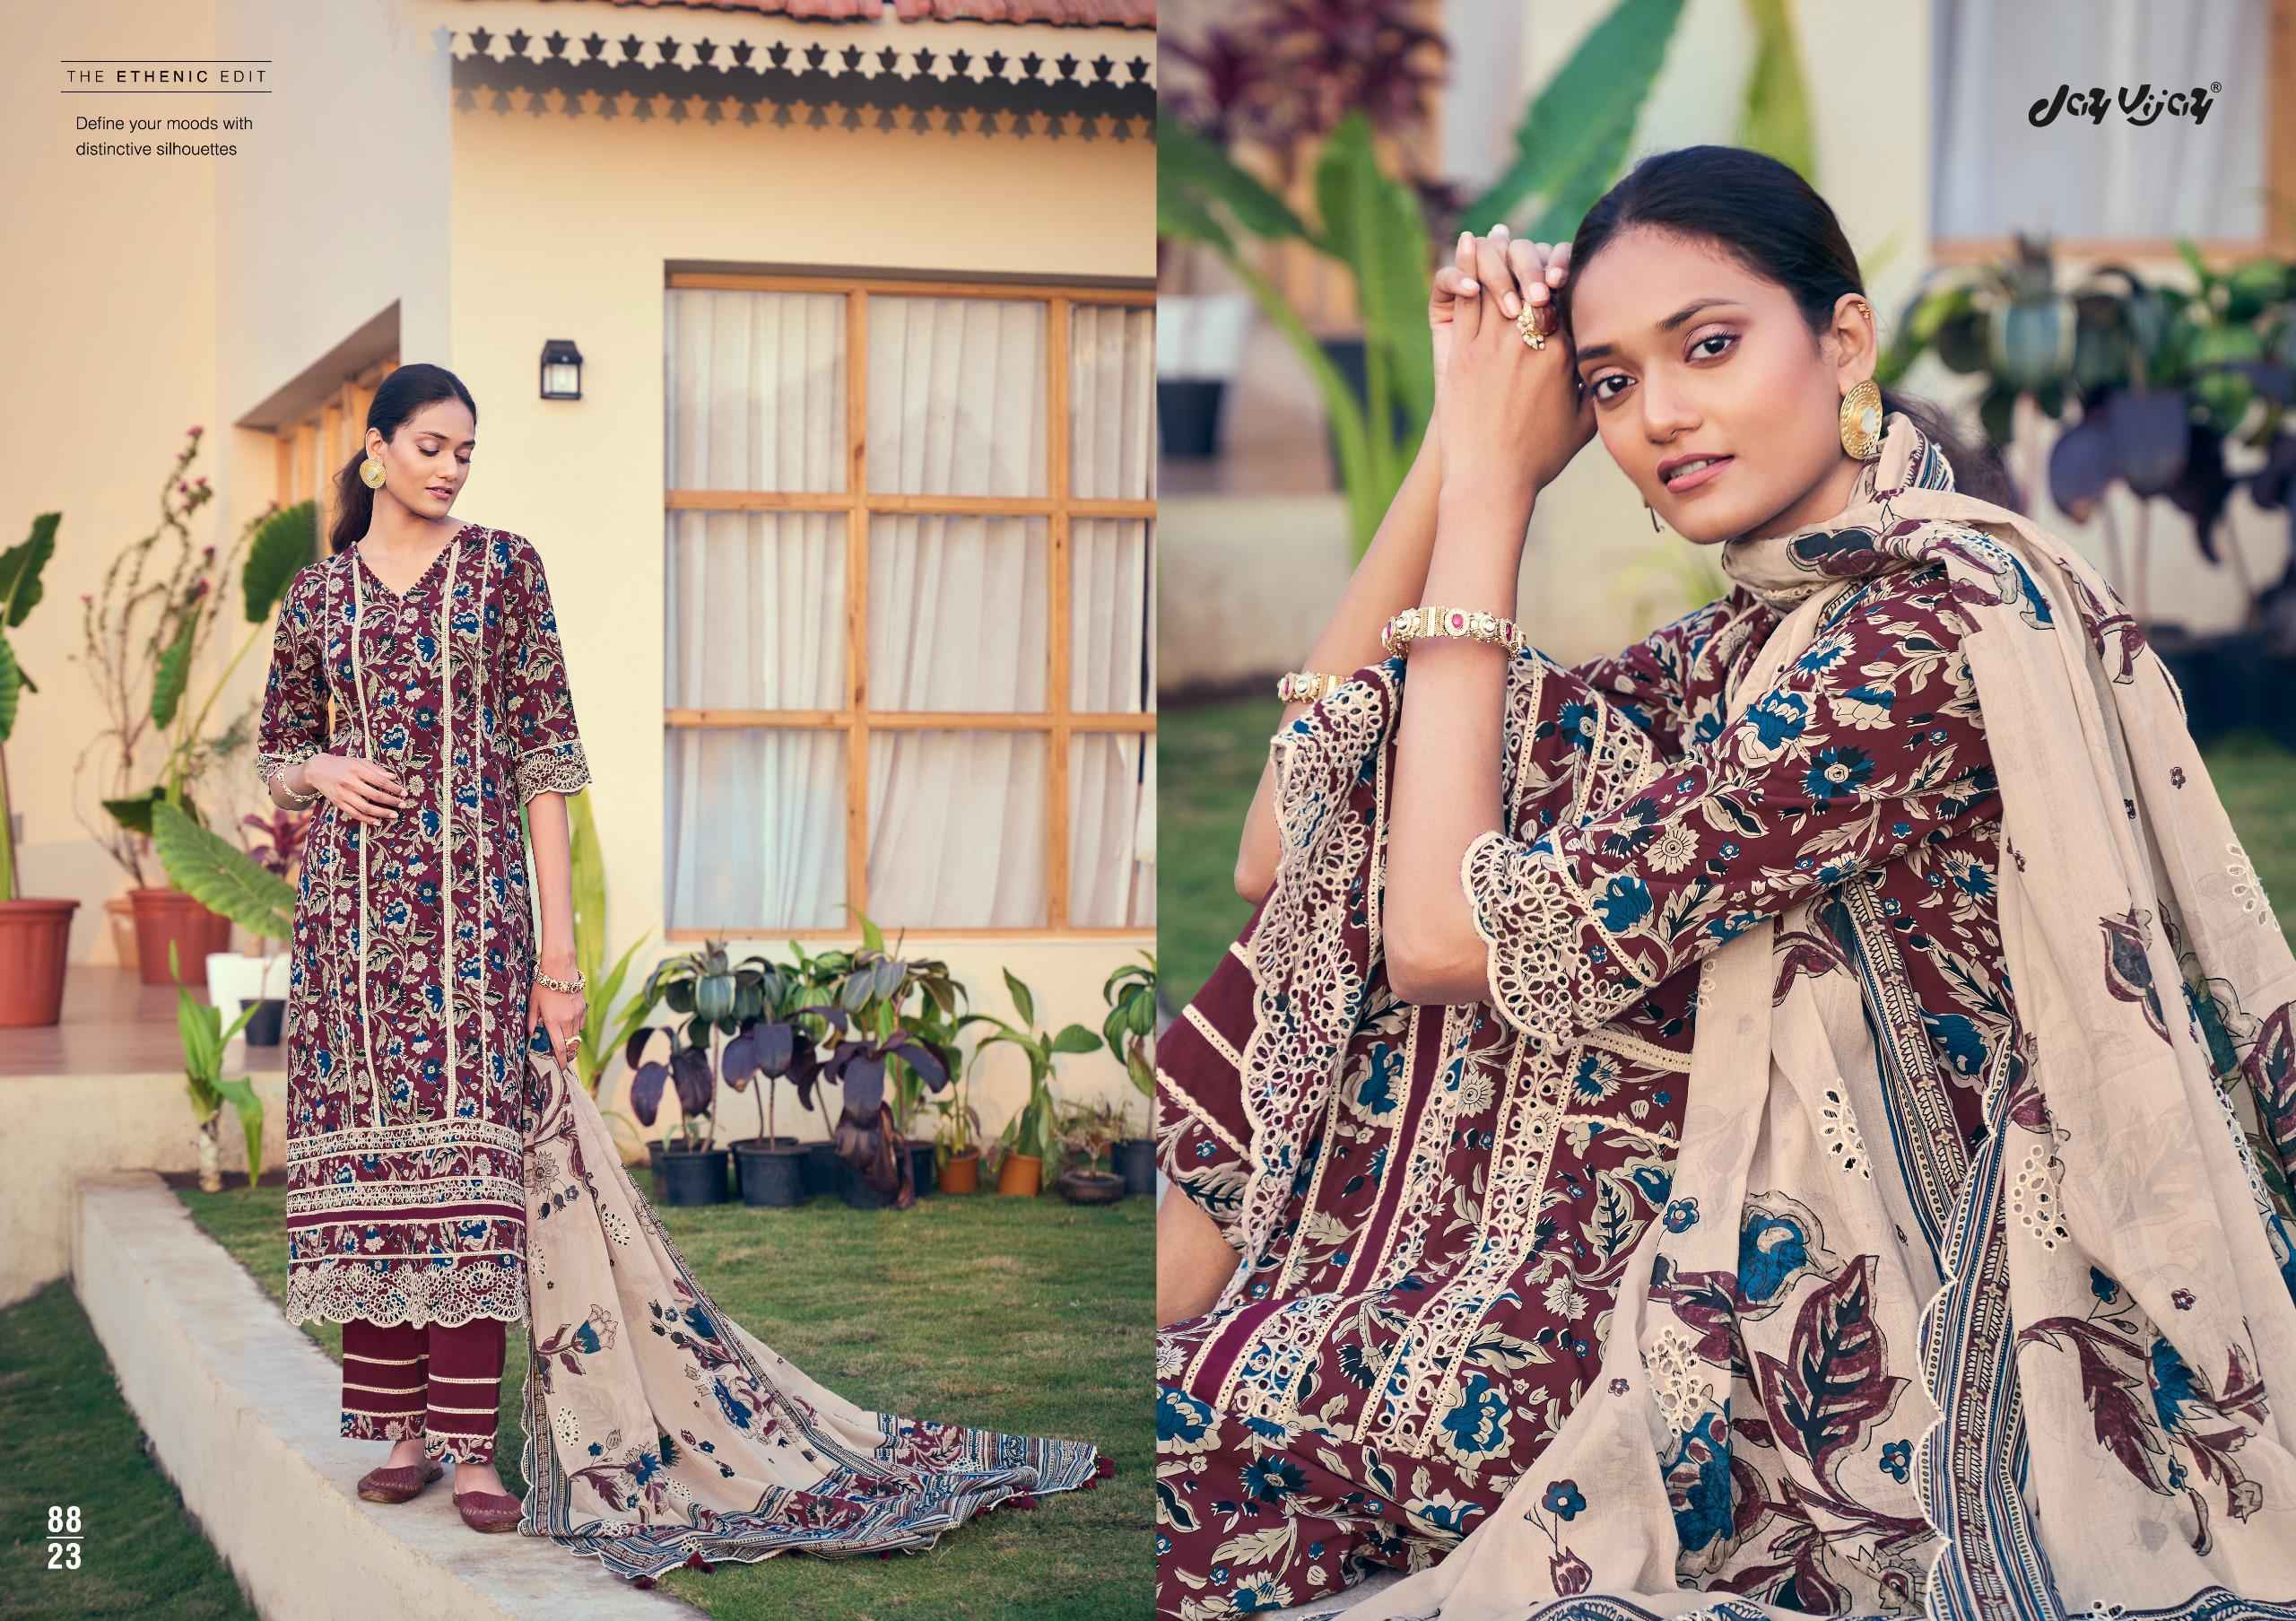 Jay Vijay Jahaan Pure Cotton Dress Material (6 Pc Catalouge)